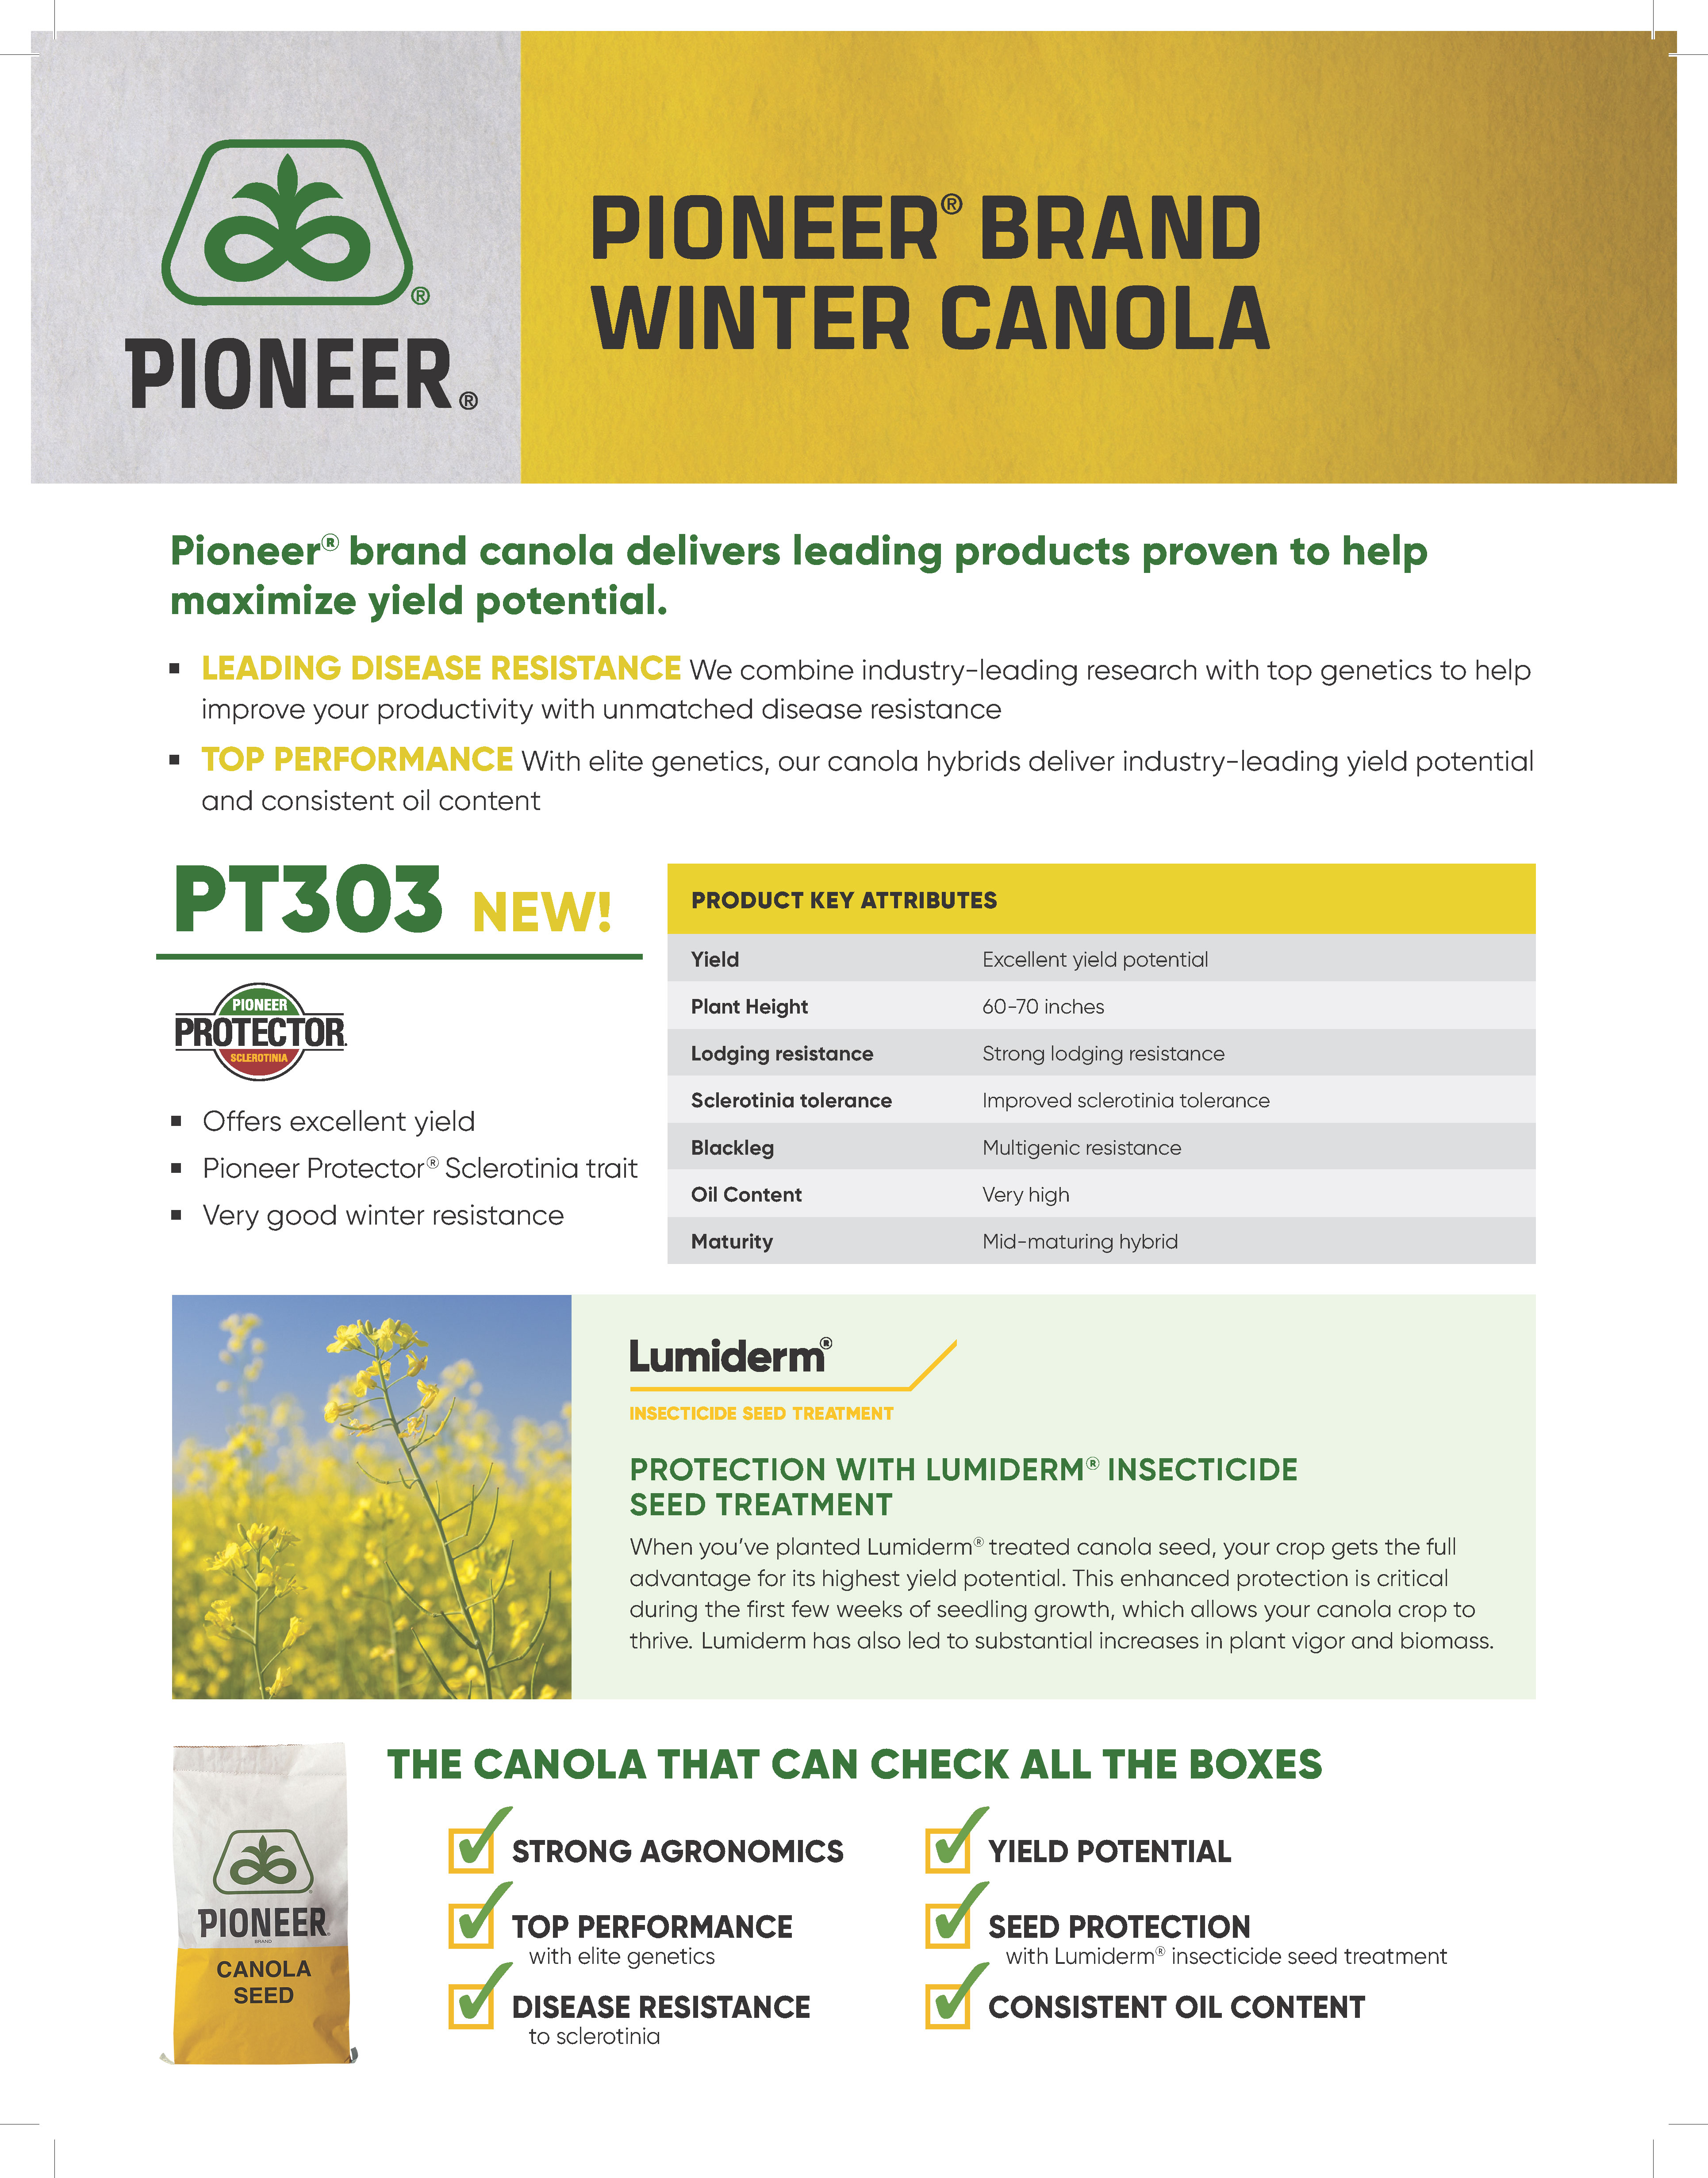 Pioneer brand winter canola